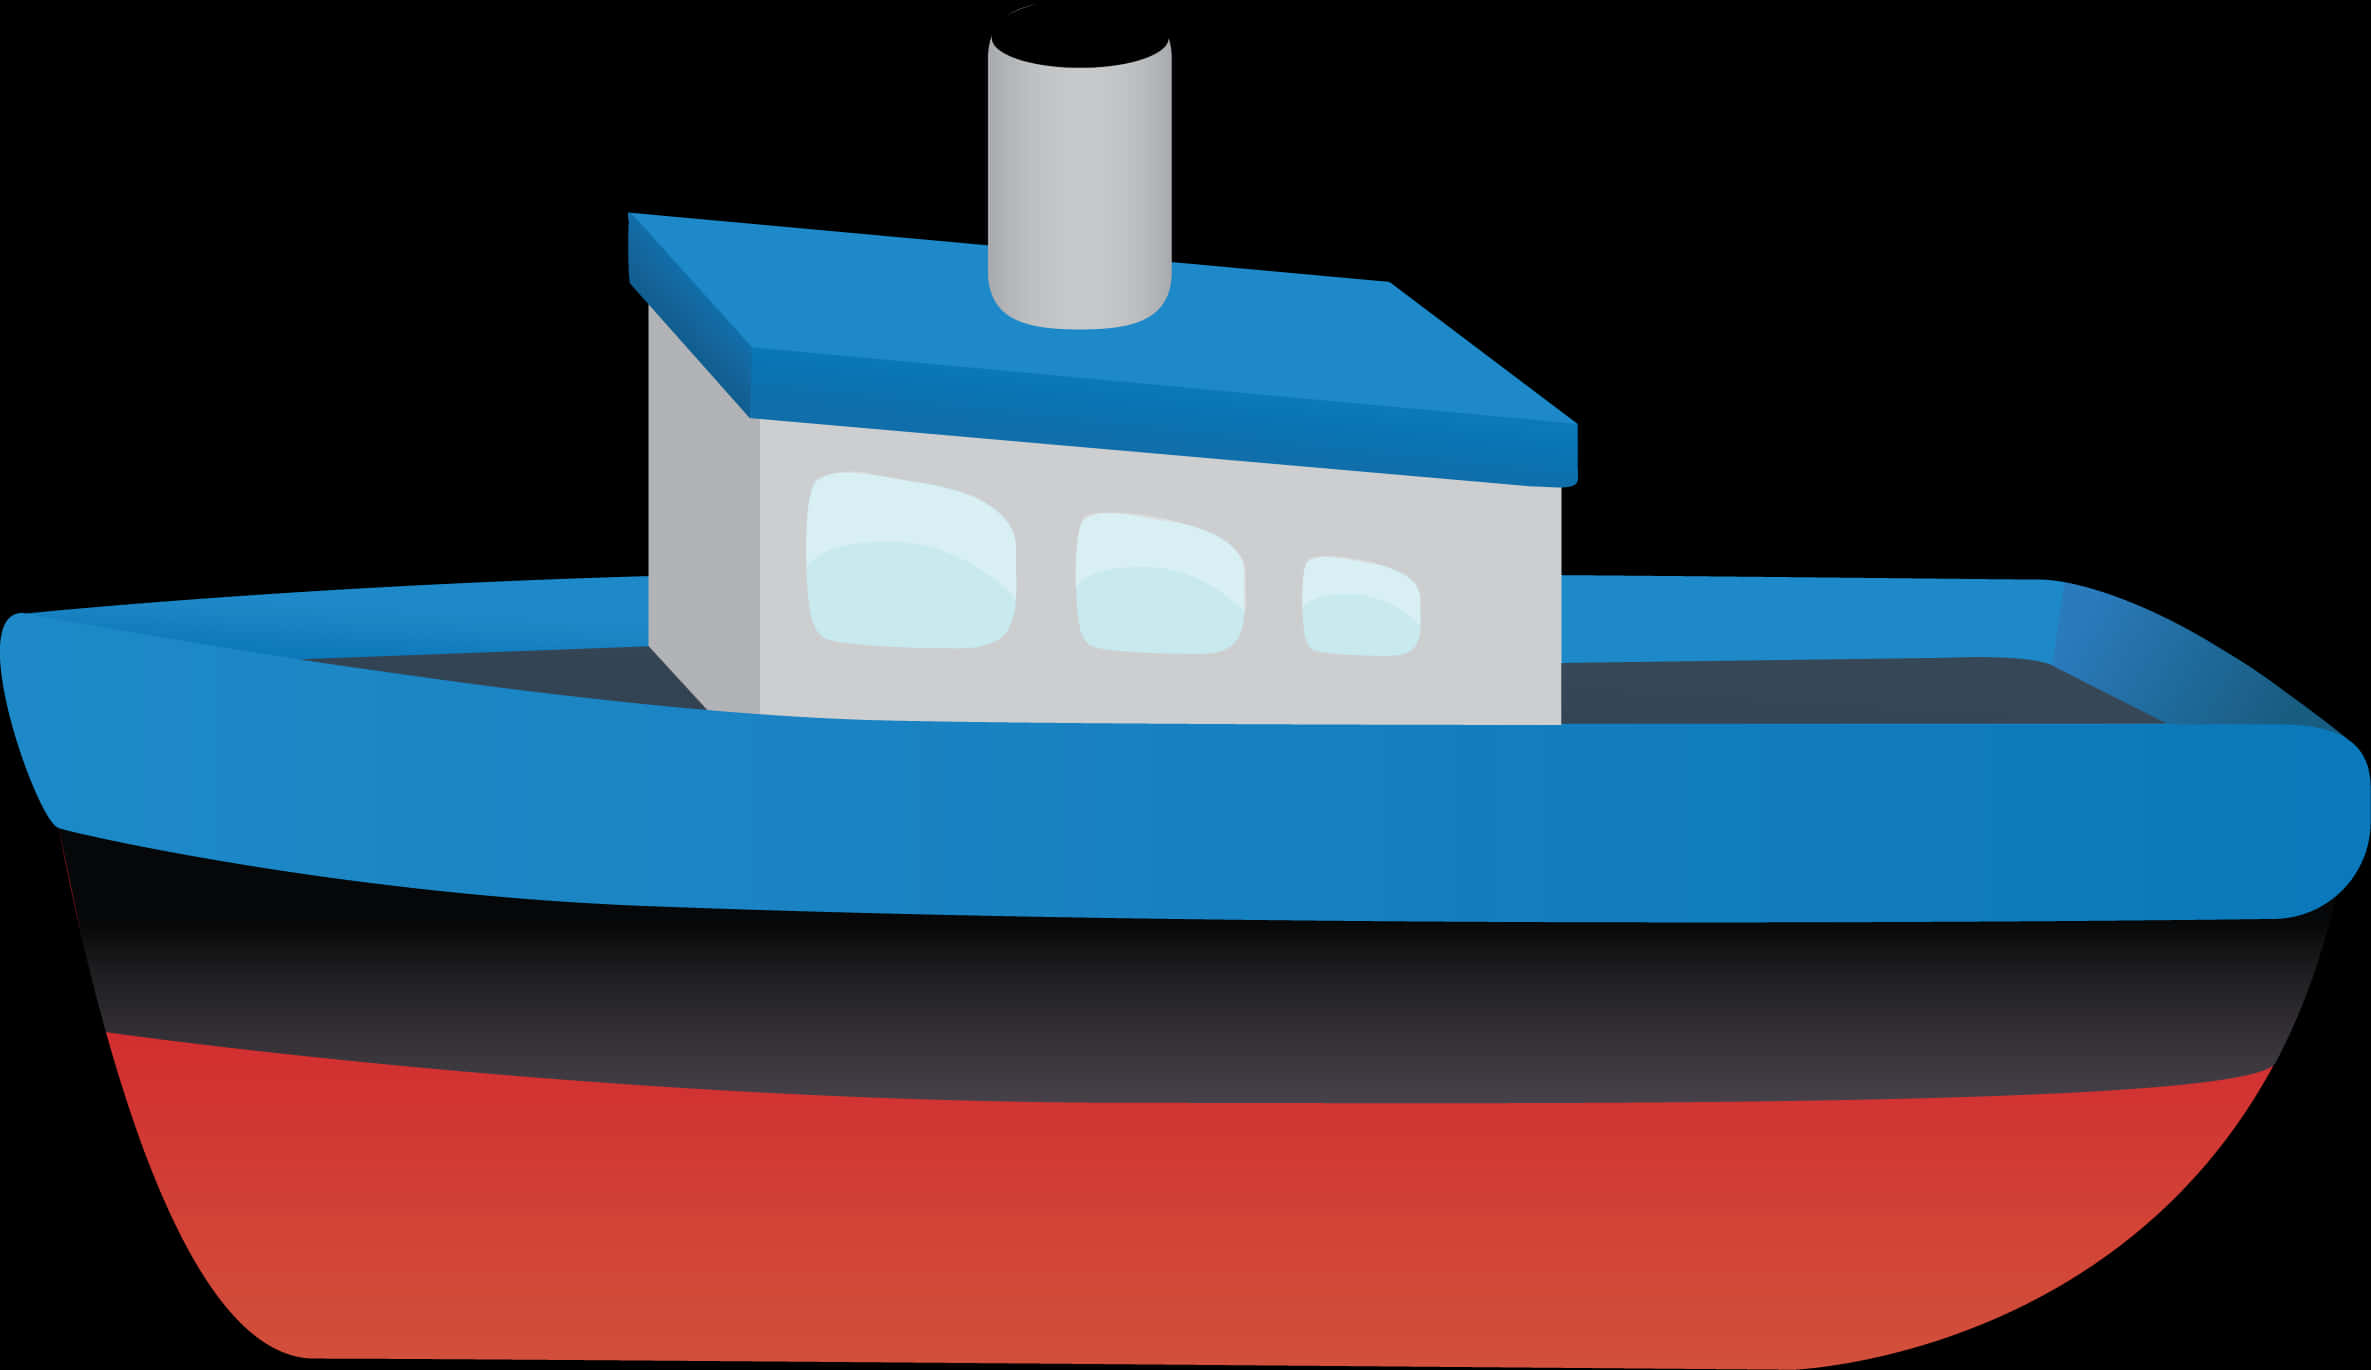 Cartoon Style Boat Illustration PNG image